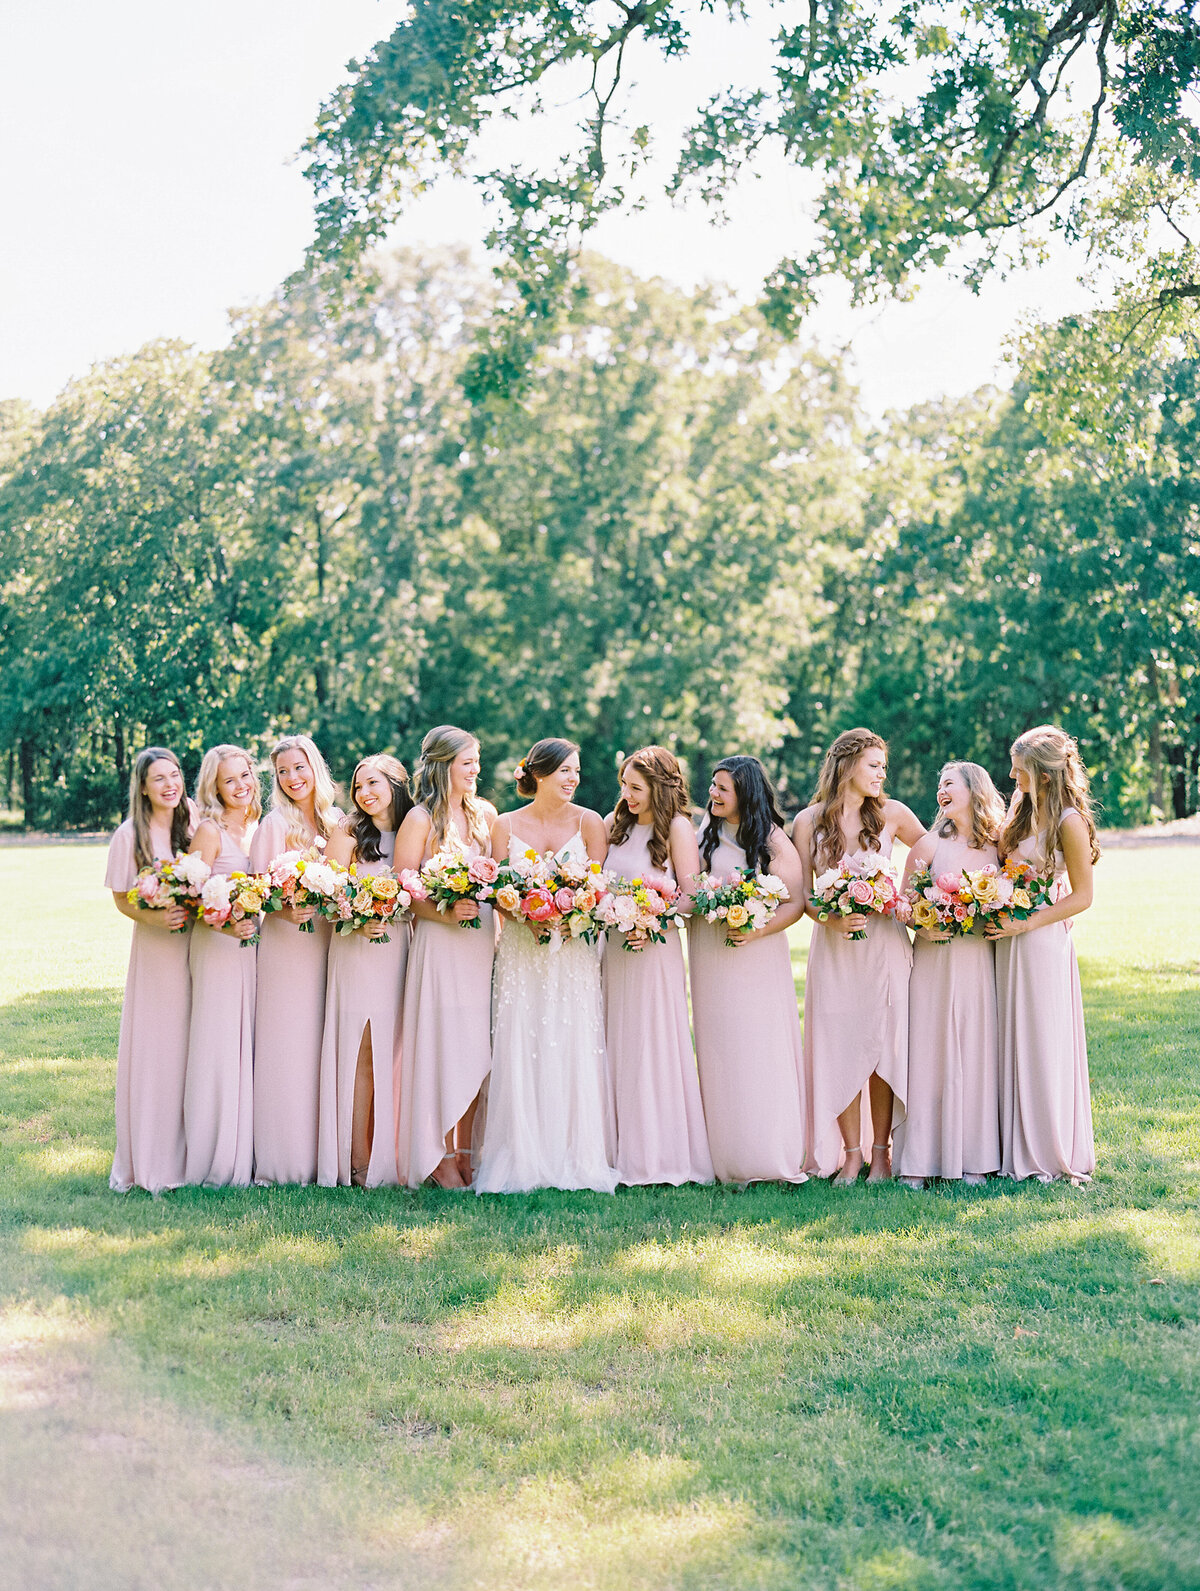 max-owens-design-bright-summer-wedding-04-bridesmaids